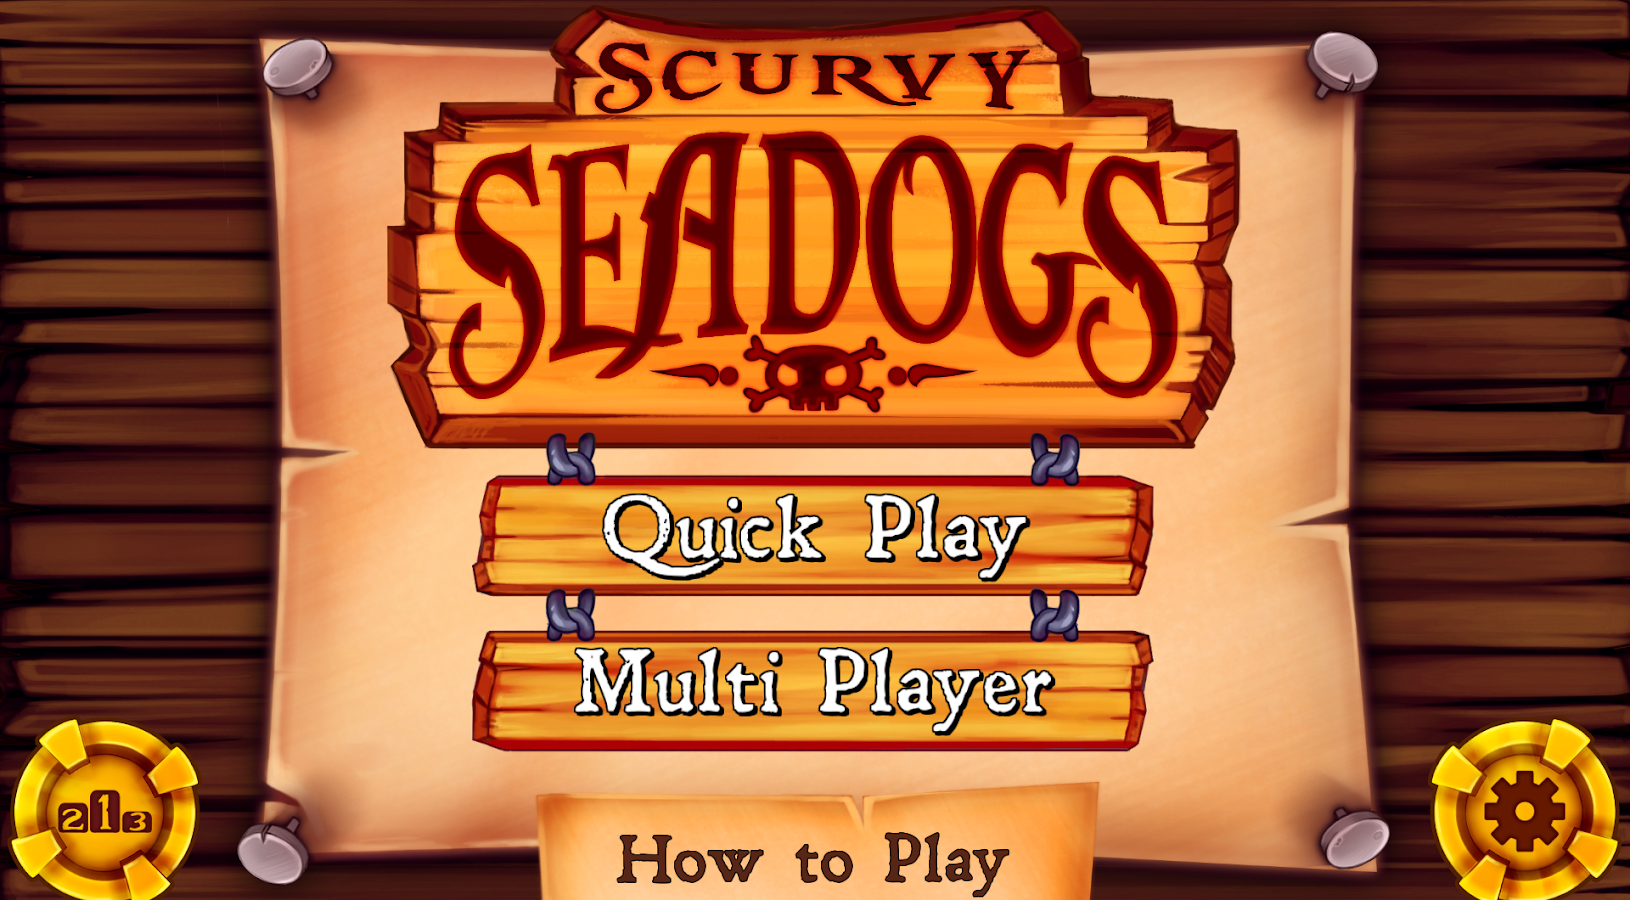    Scurvy Seadogs- screenshot  